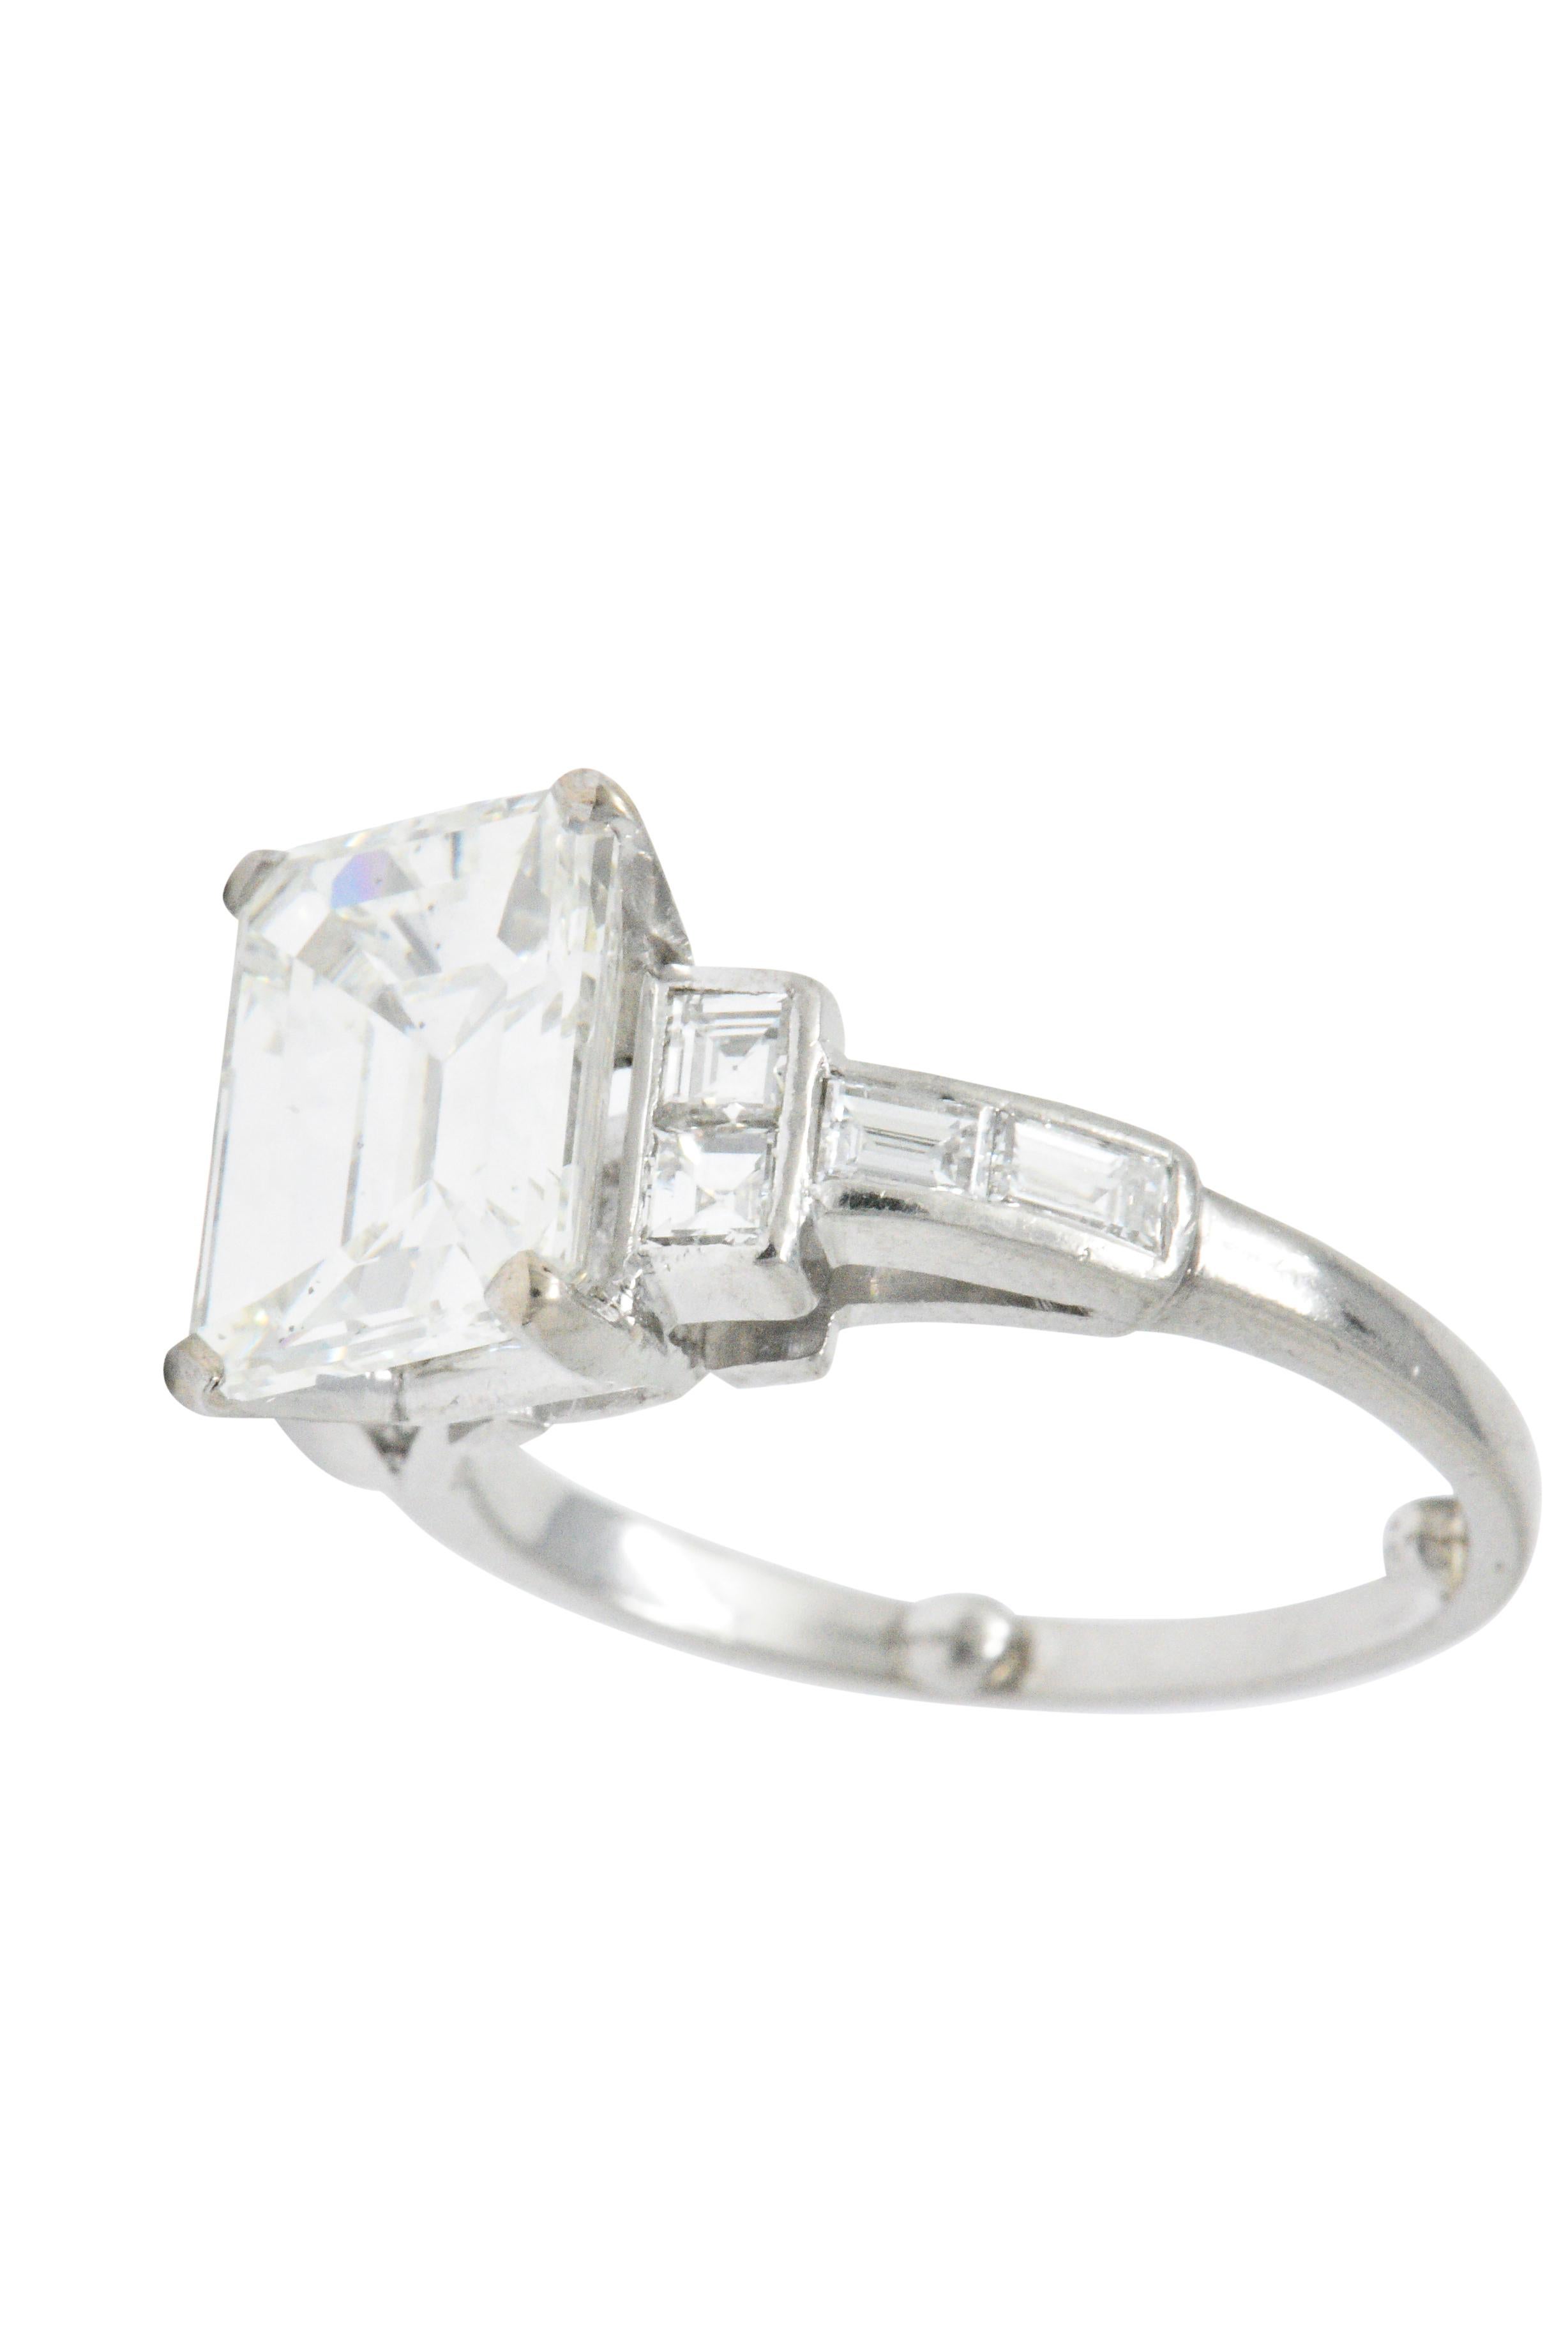 Art Deco 4.02 Carat Emerald Cut Diamond and Platinum Engagement Ring GIA In Excellent Condition In Philadelphia, PA